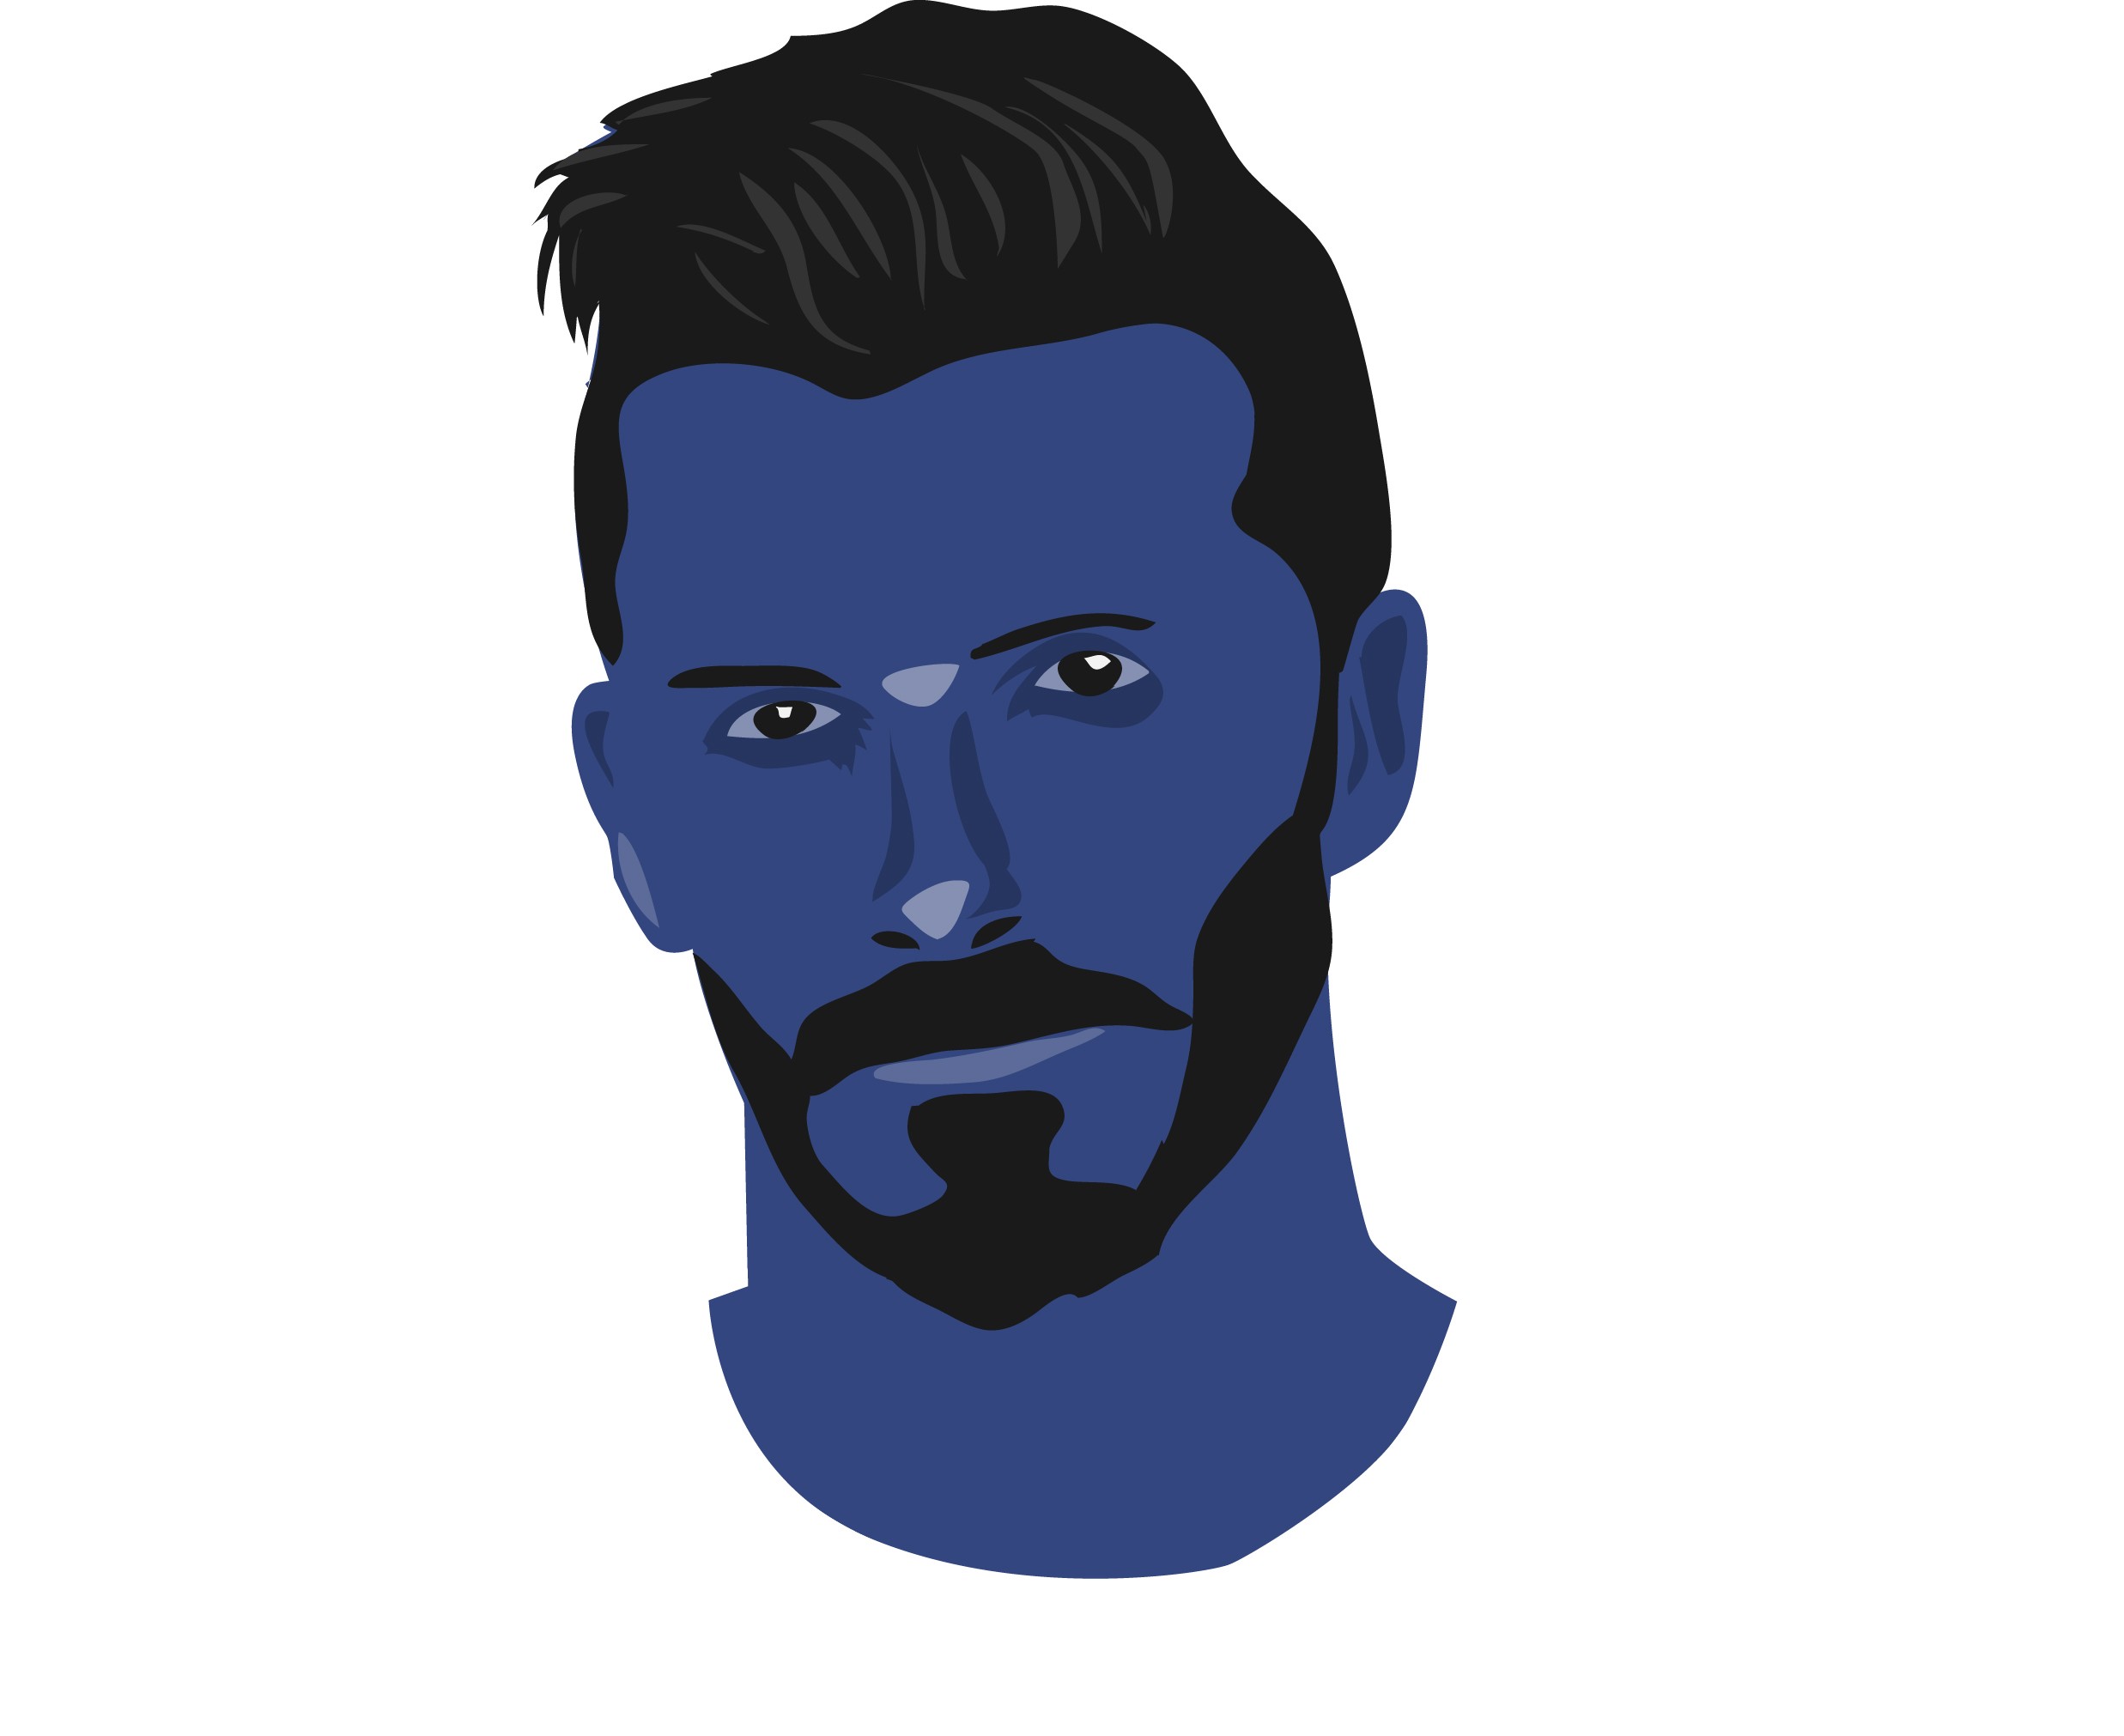 General 2474x2022 David Beckham men photoshopped blue black beard simple background digital art